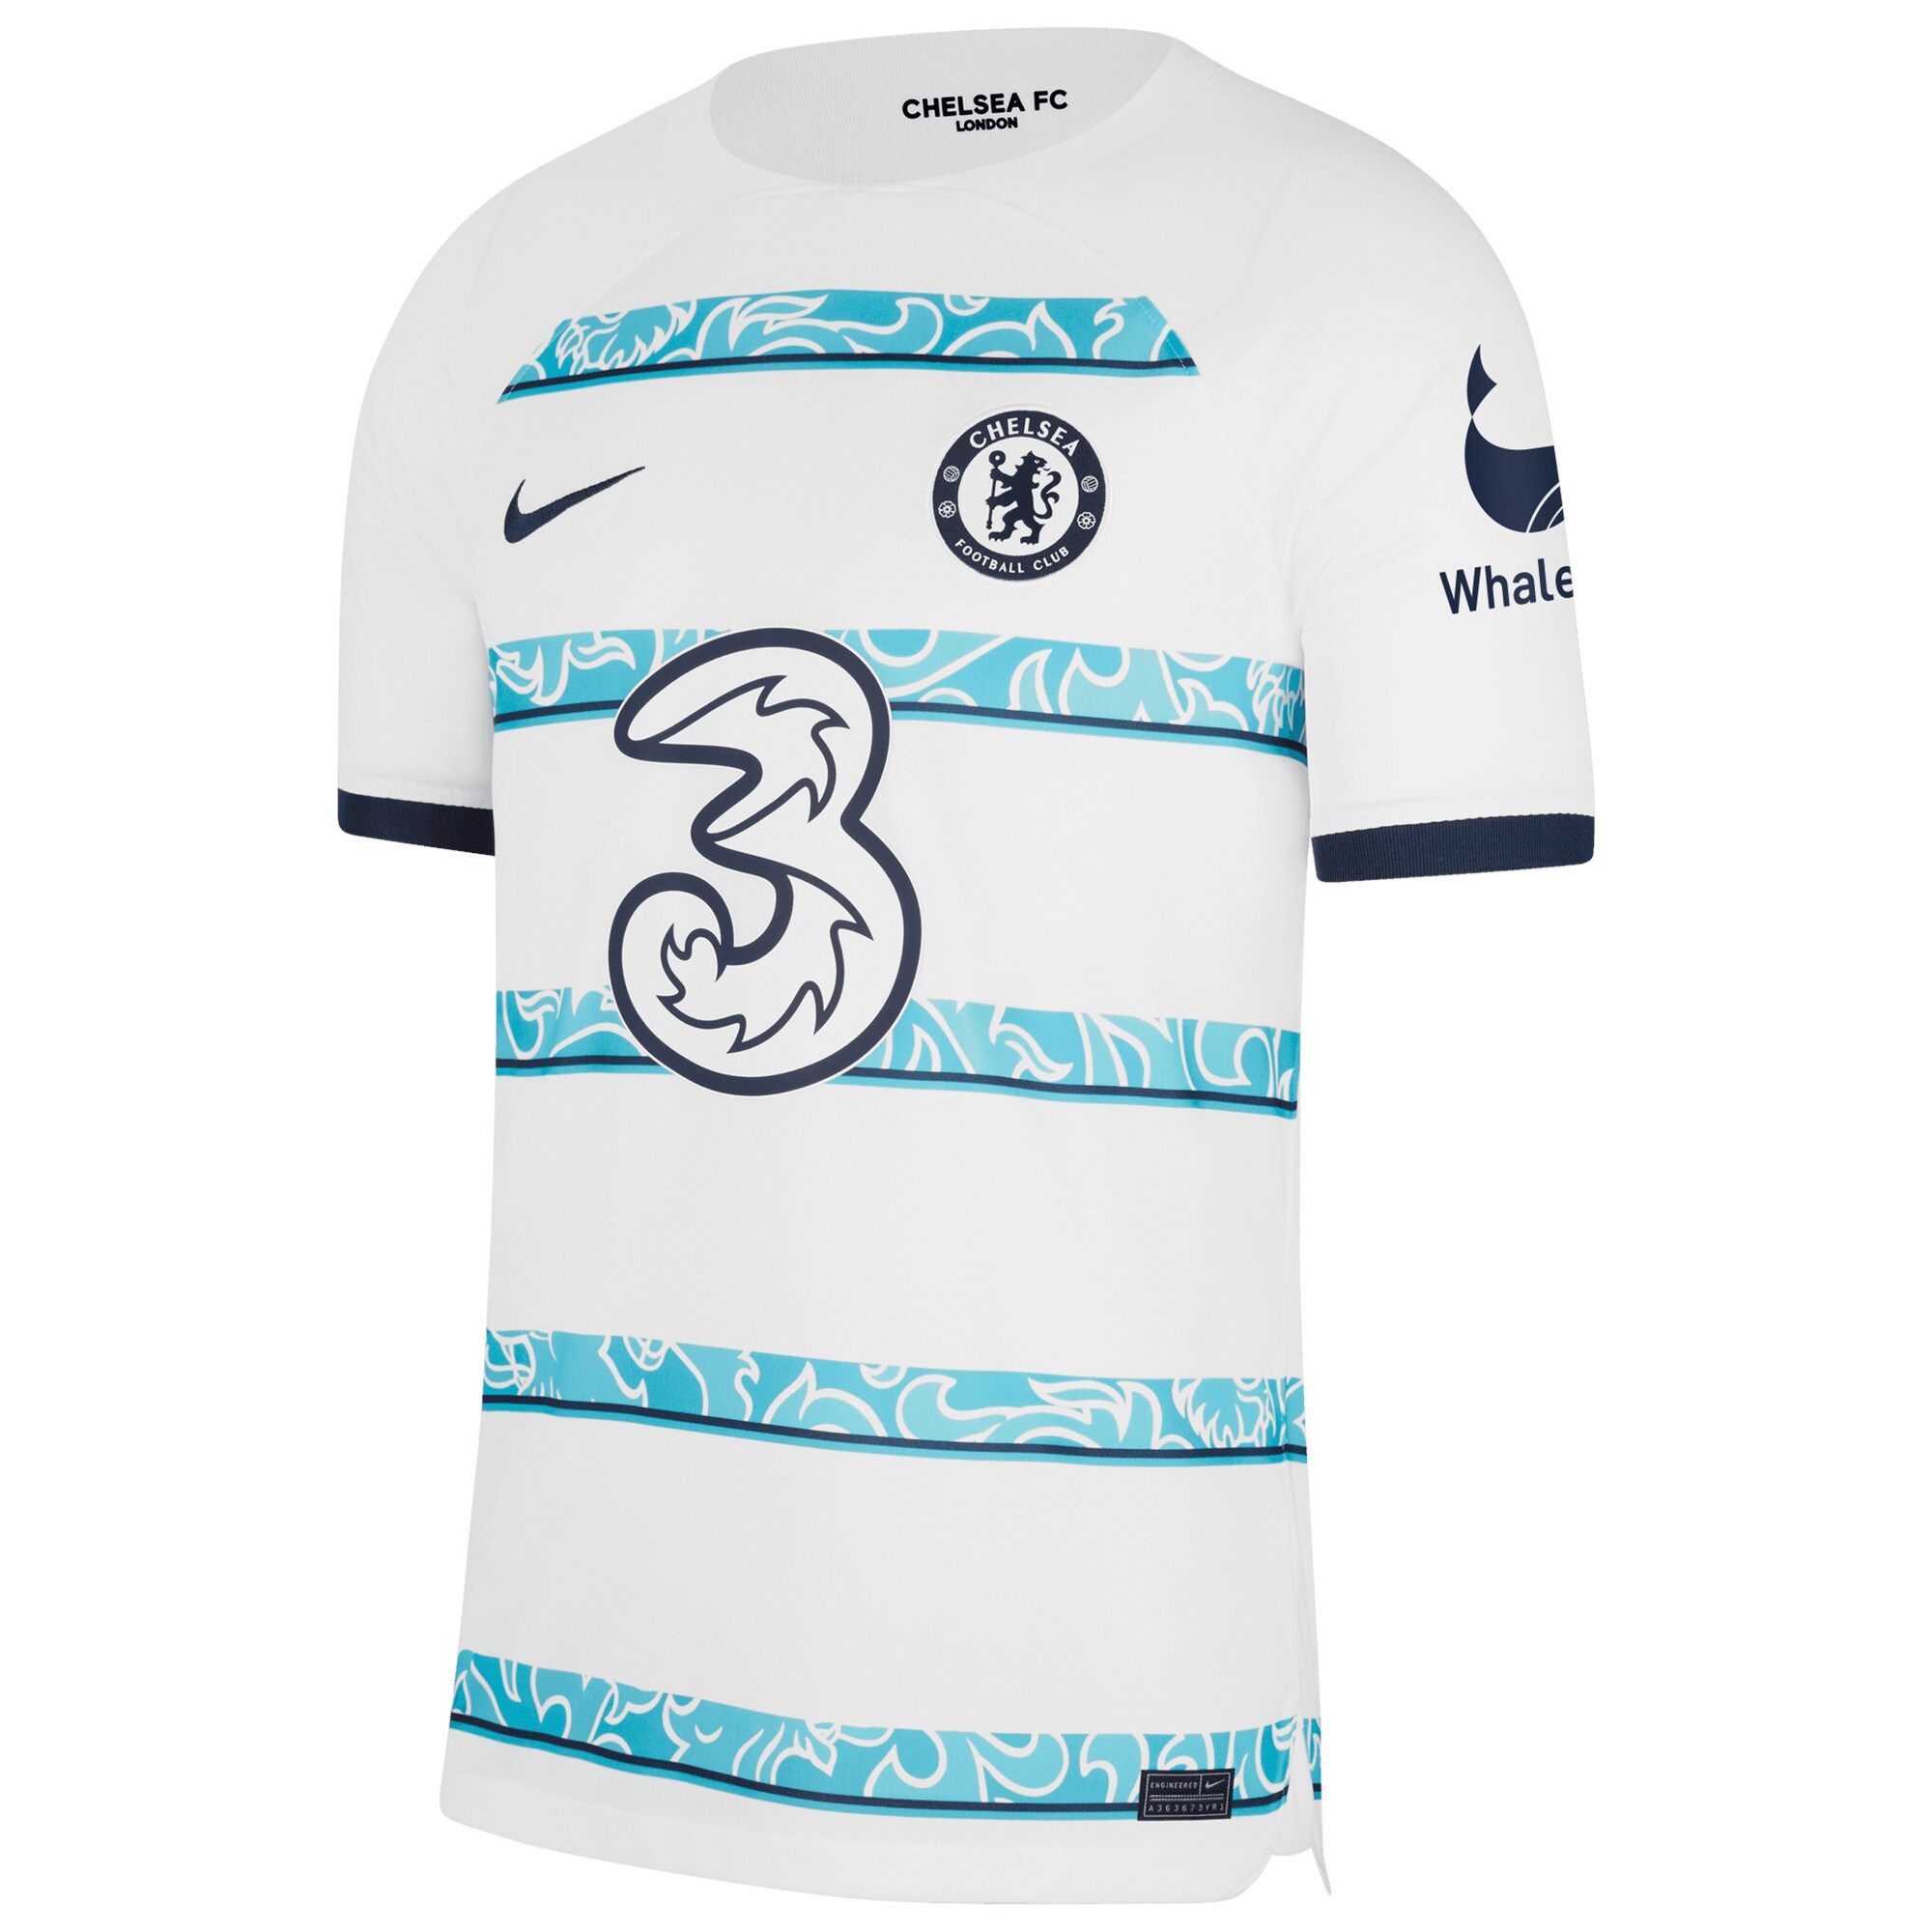 Chelsea Cup Away Stadium Shirt 2022-23 with Nouwen 3 printing